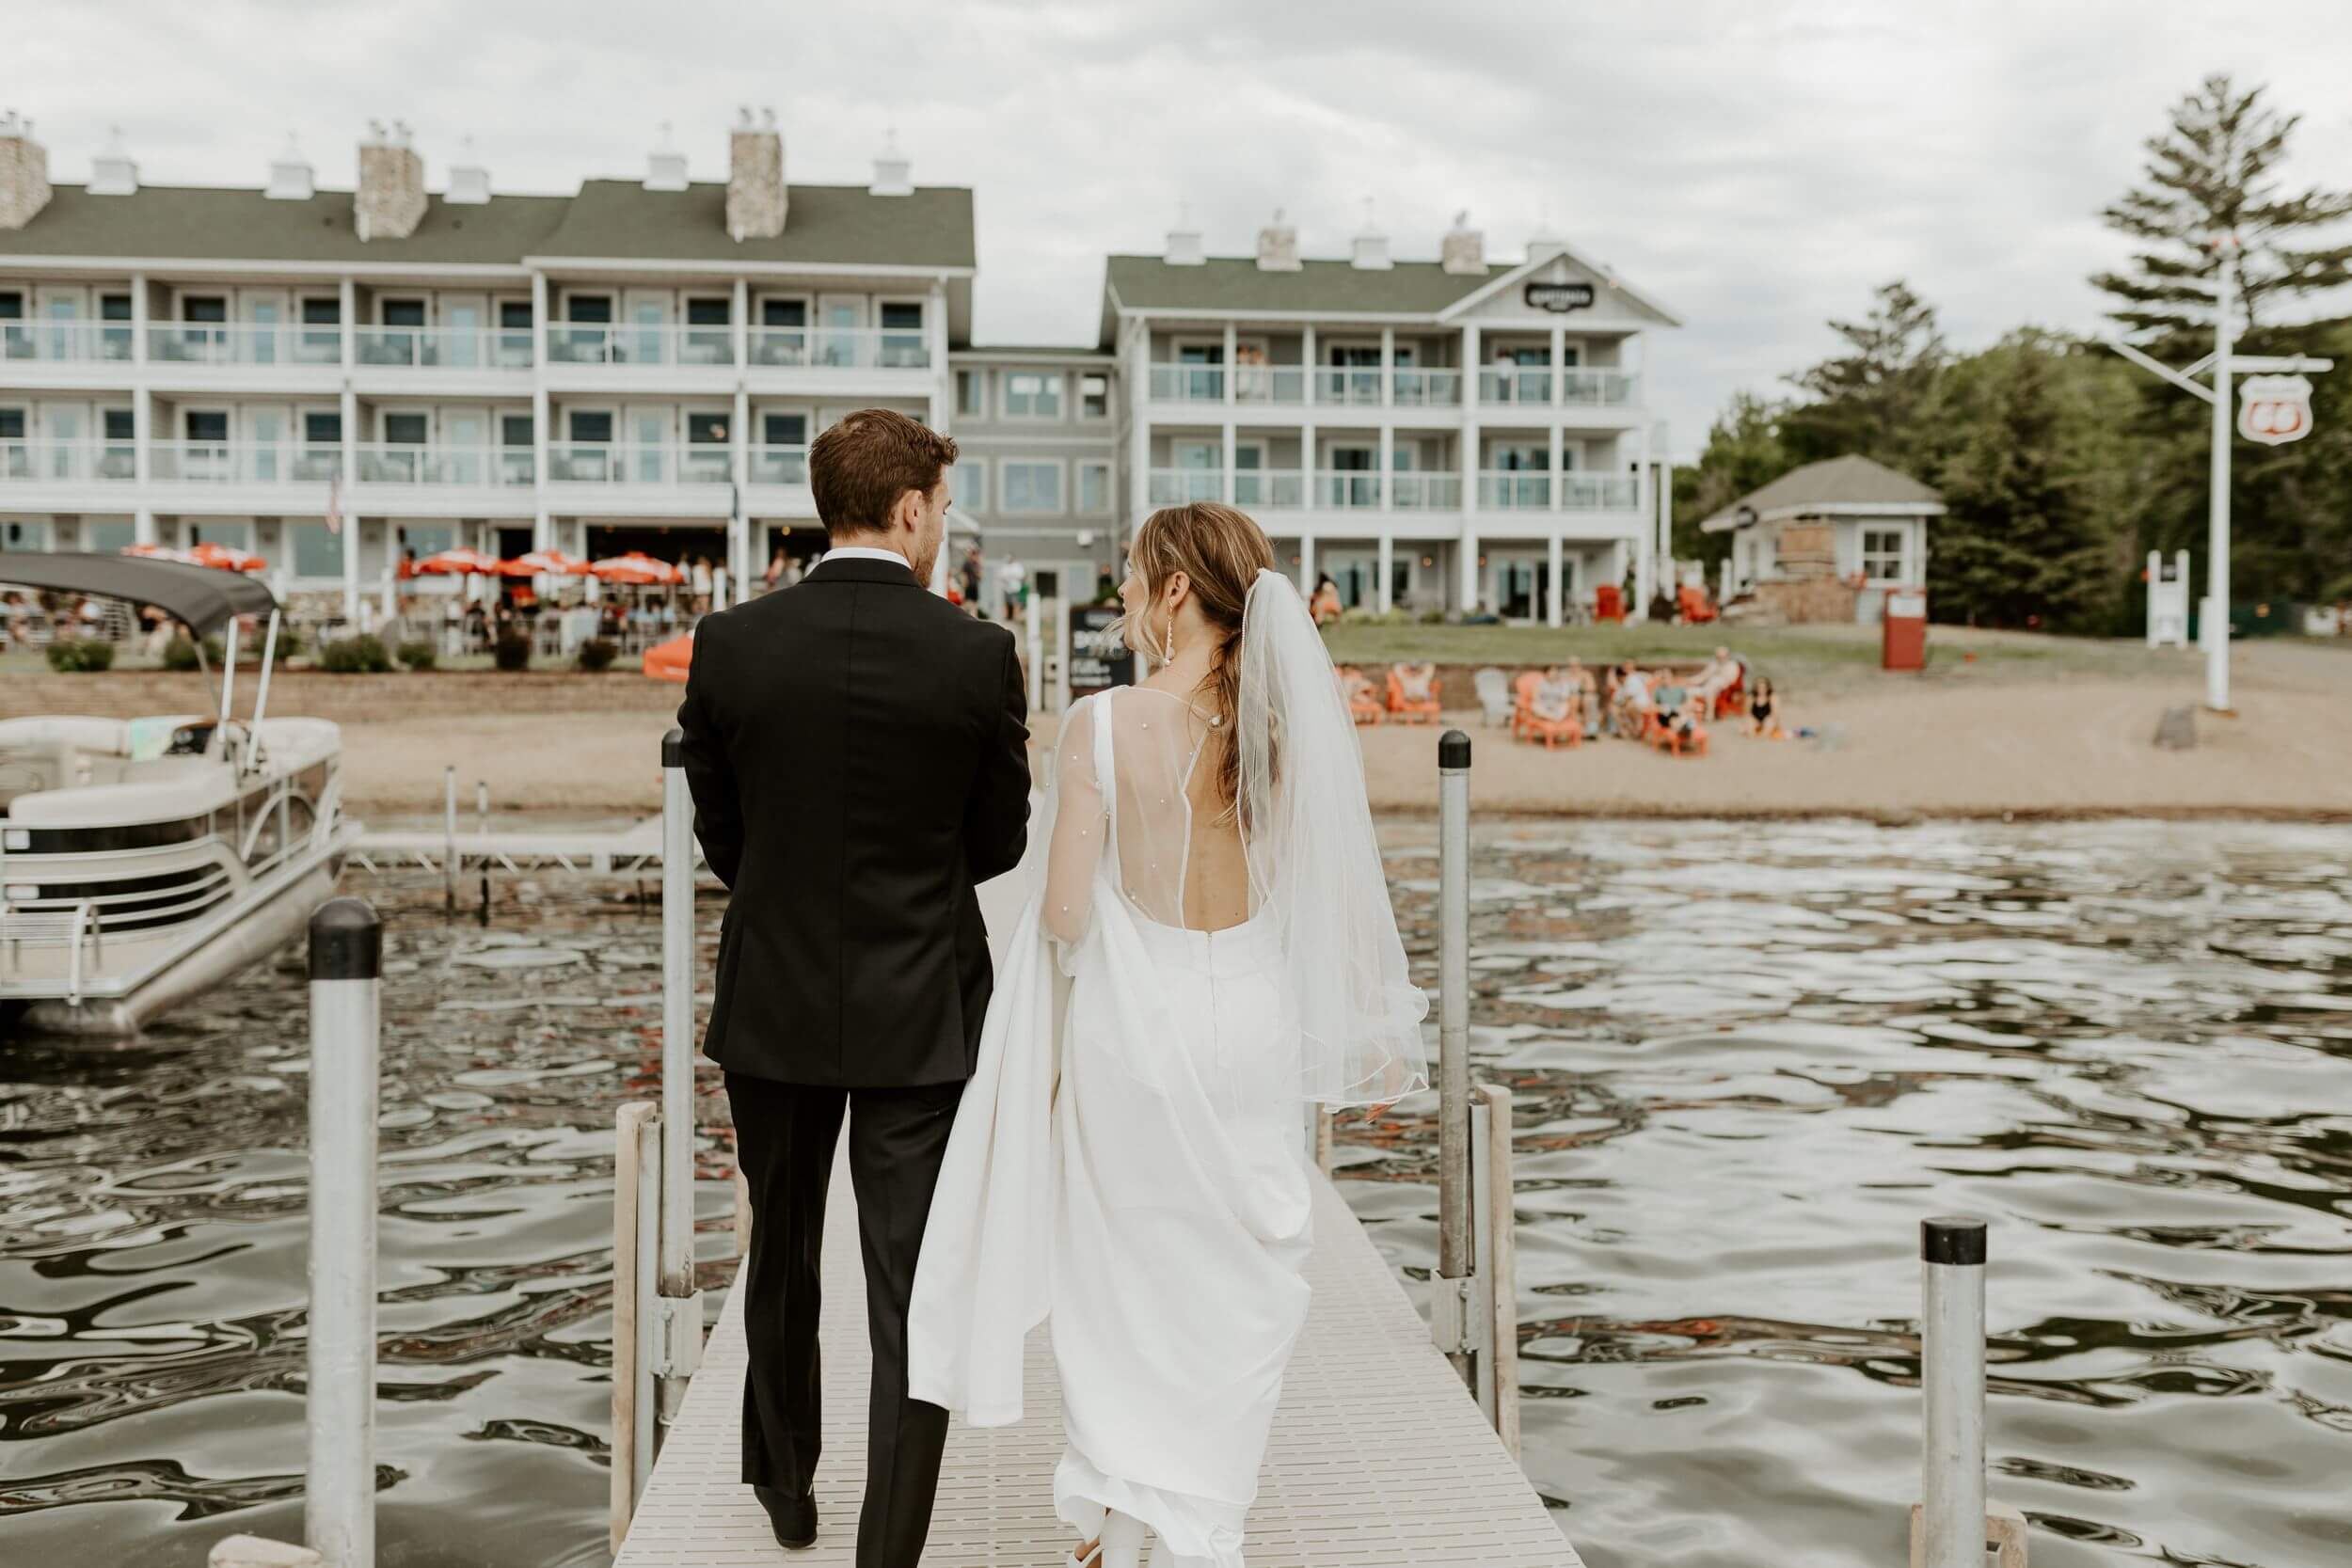 Bride and groom walk on dock towards their wedding venue in Brainerd, Minnesota